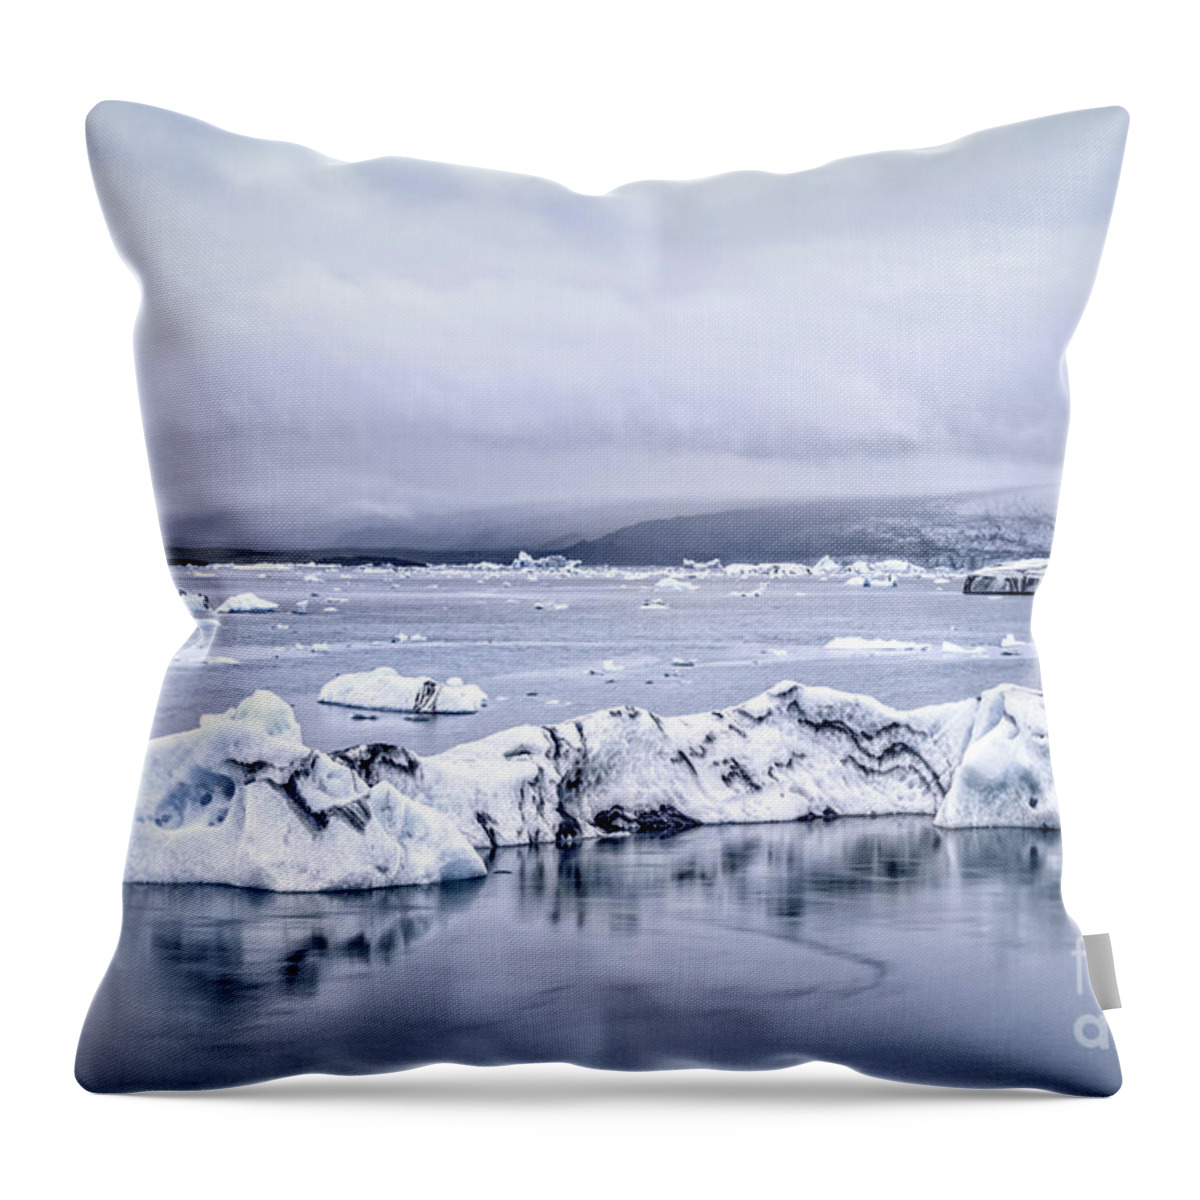 Kremsdorf Throw Pillow featuring the photograph Land Of Ice by Evelina Kremsdorf